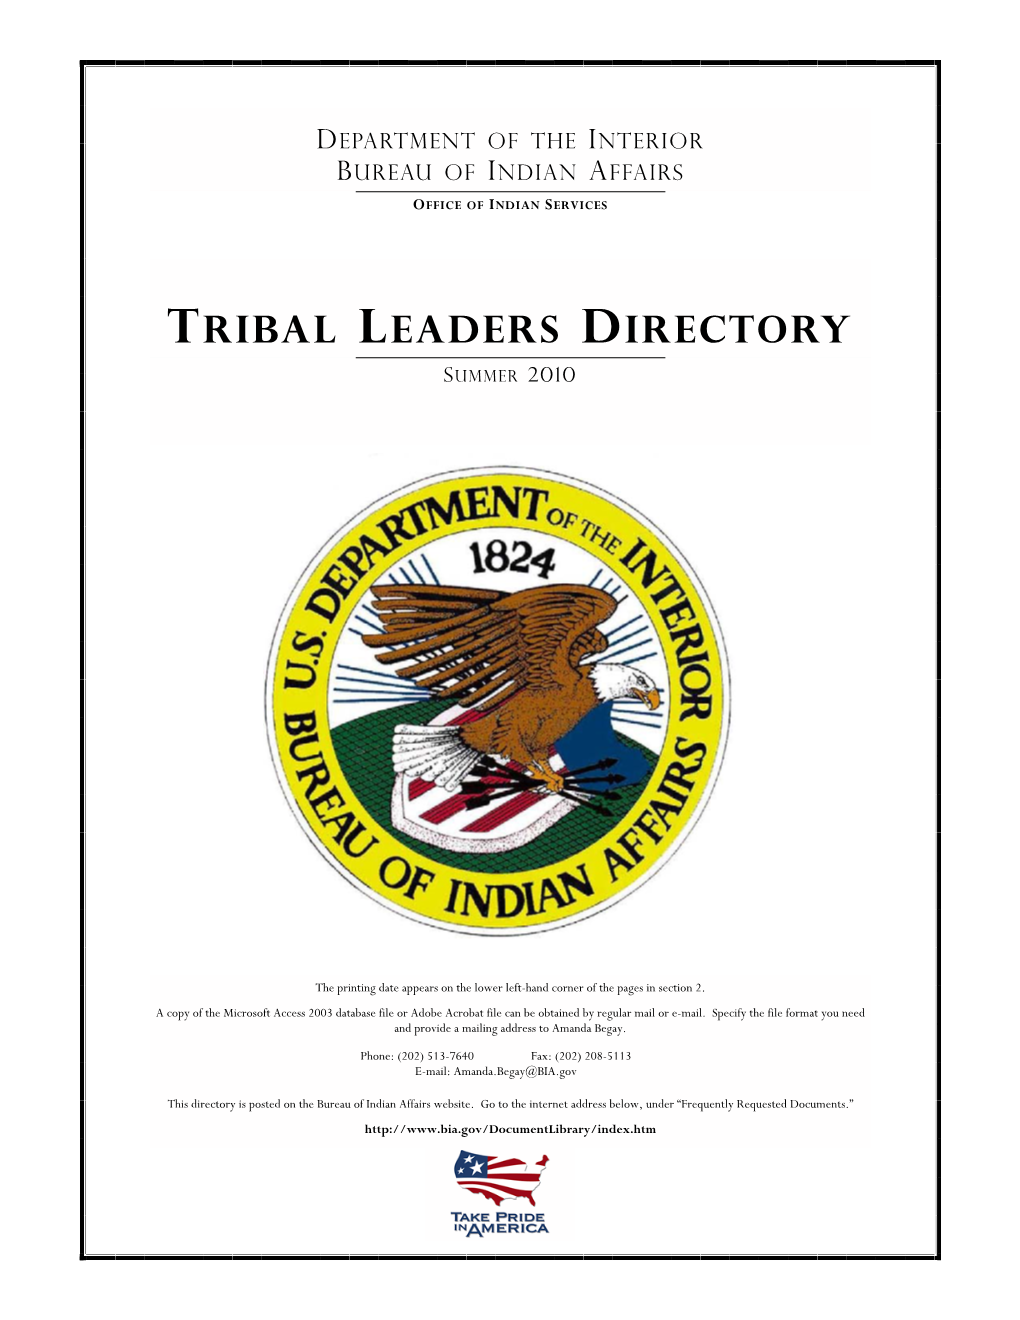 Tribal Leaders Directory Summer 2010